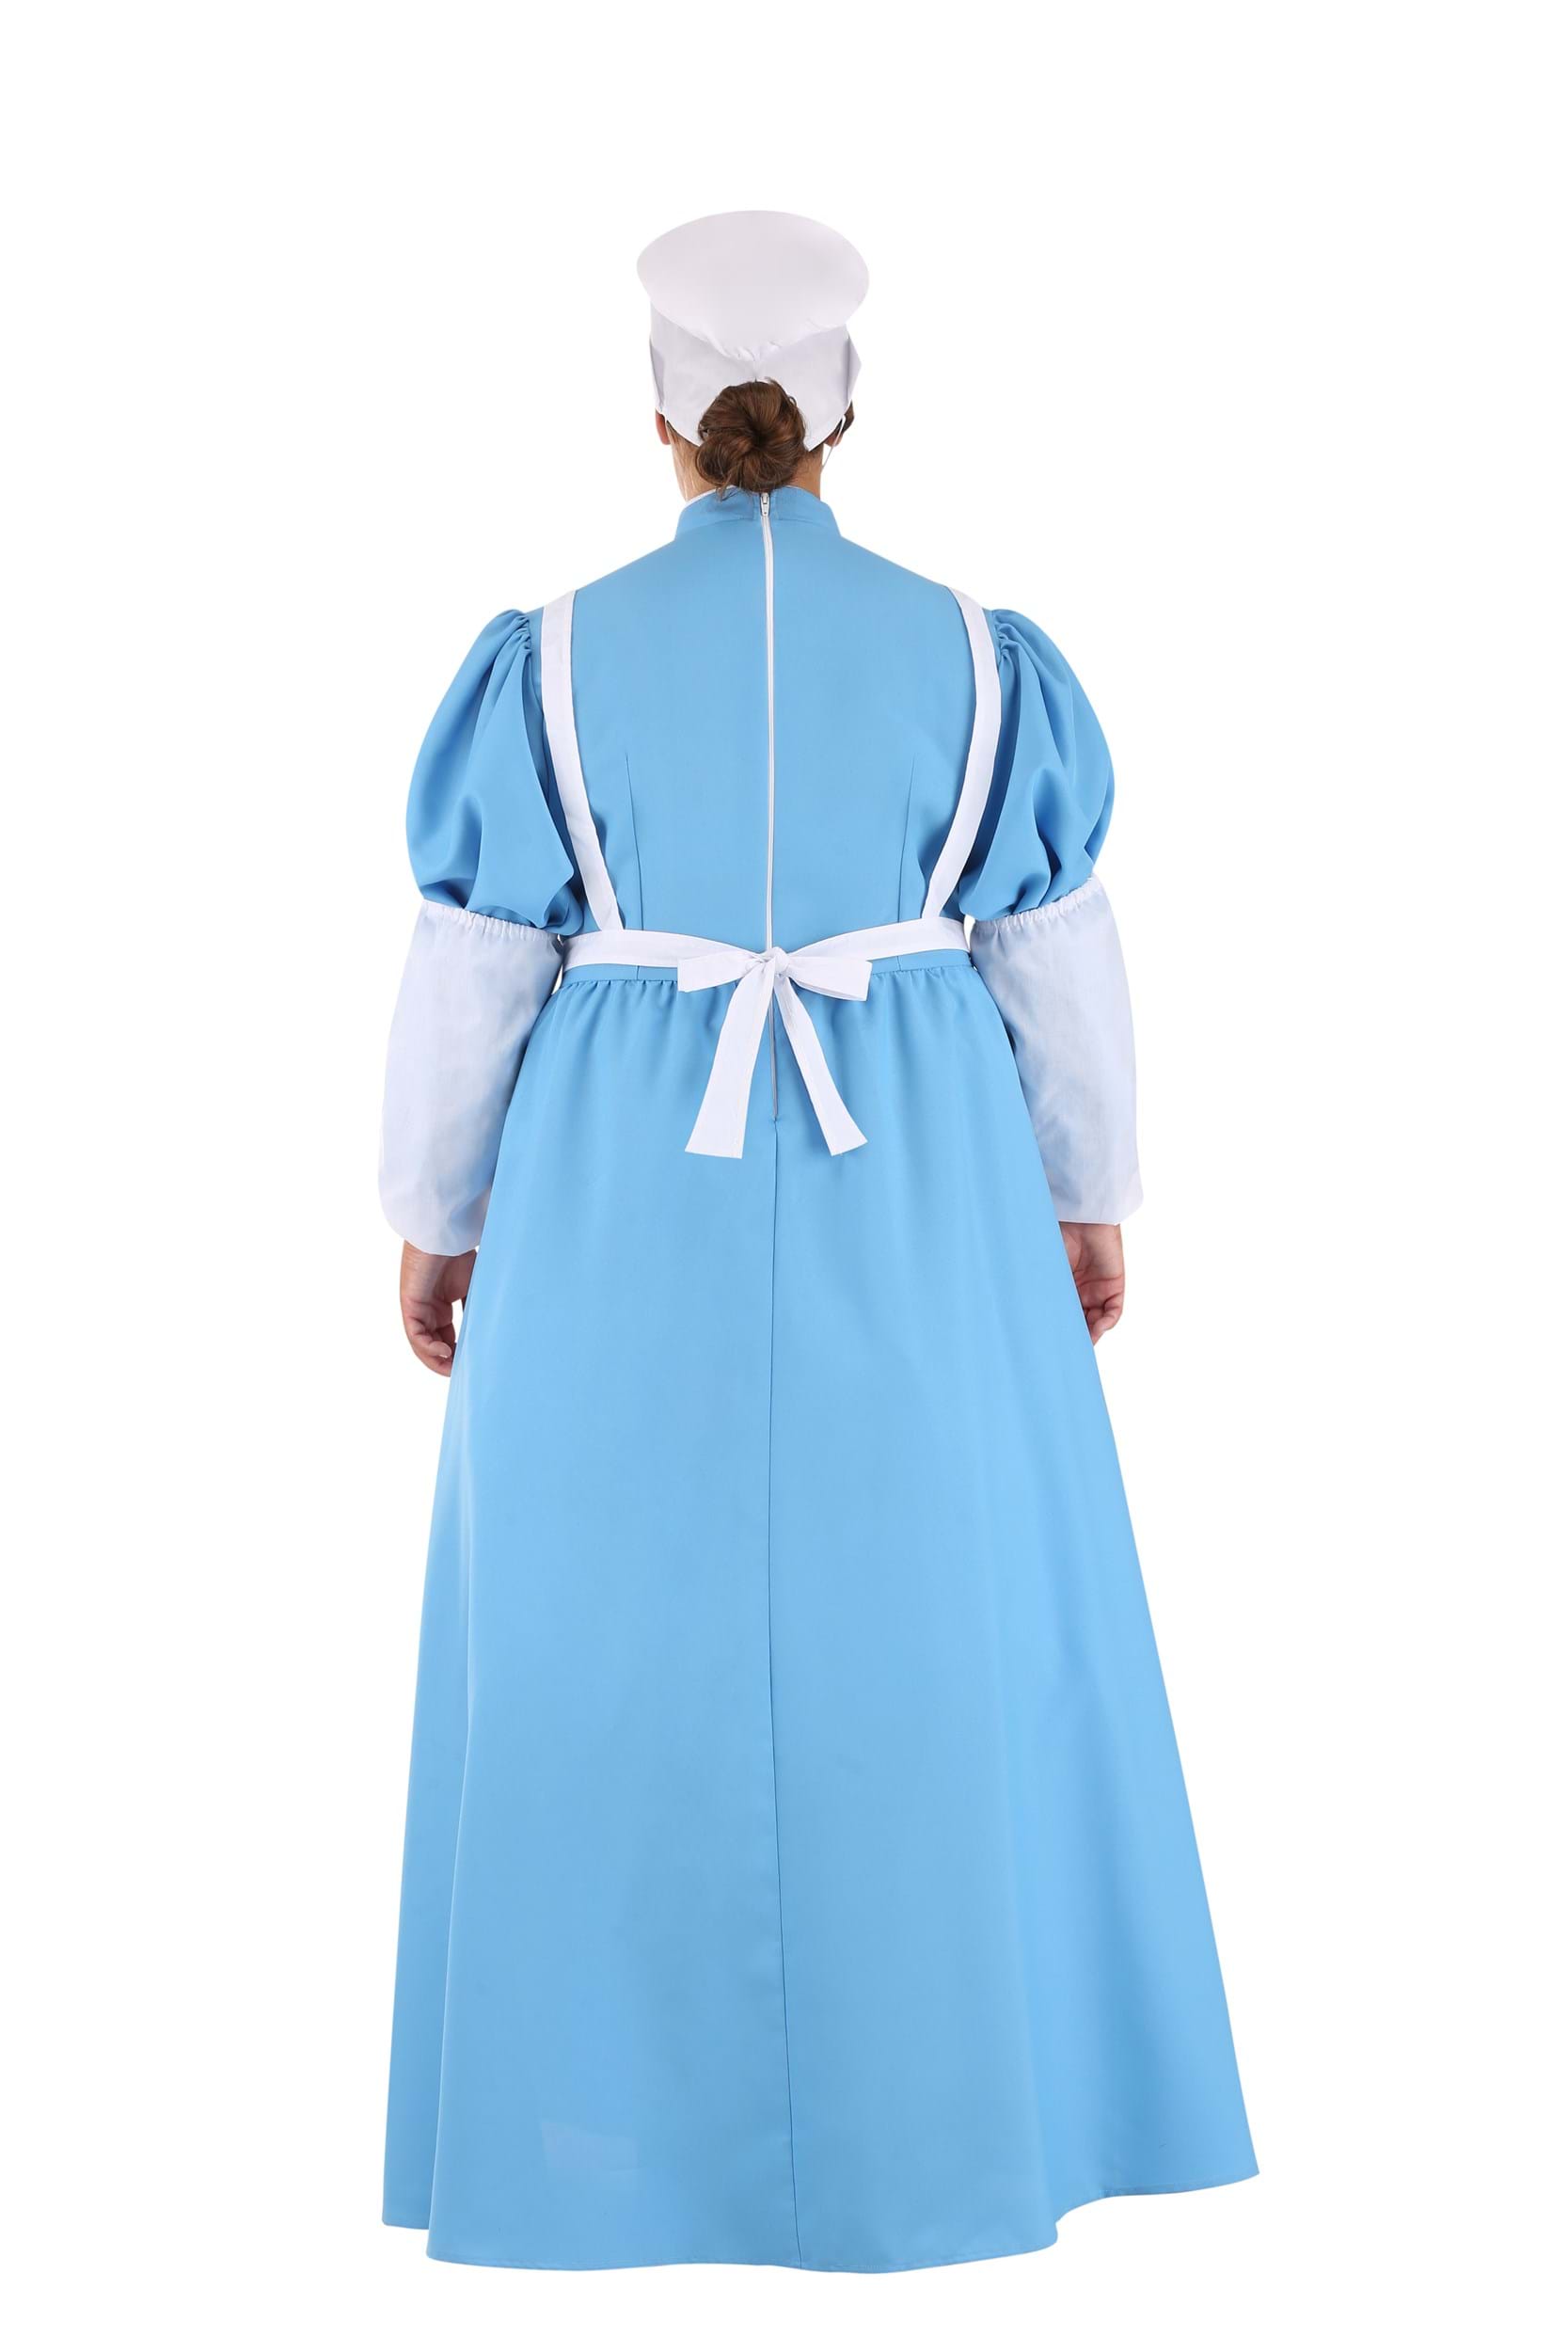 Plus Size Clara Barton Red Cross Costume